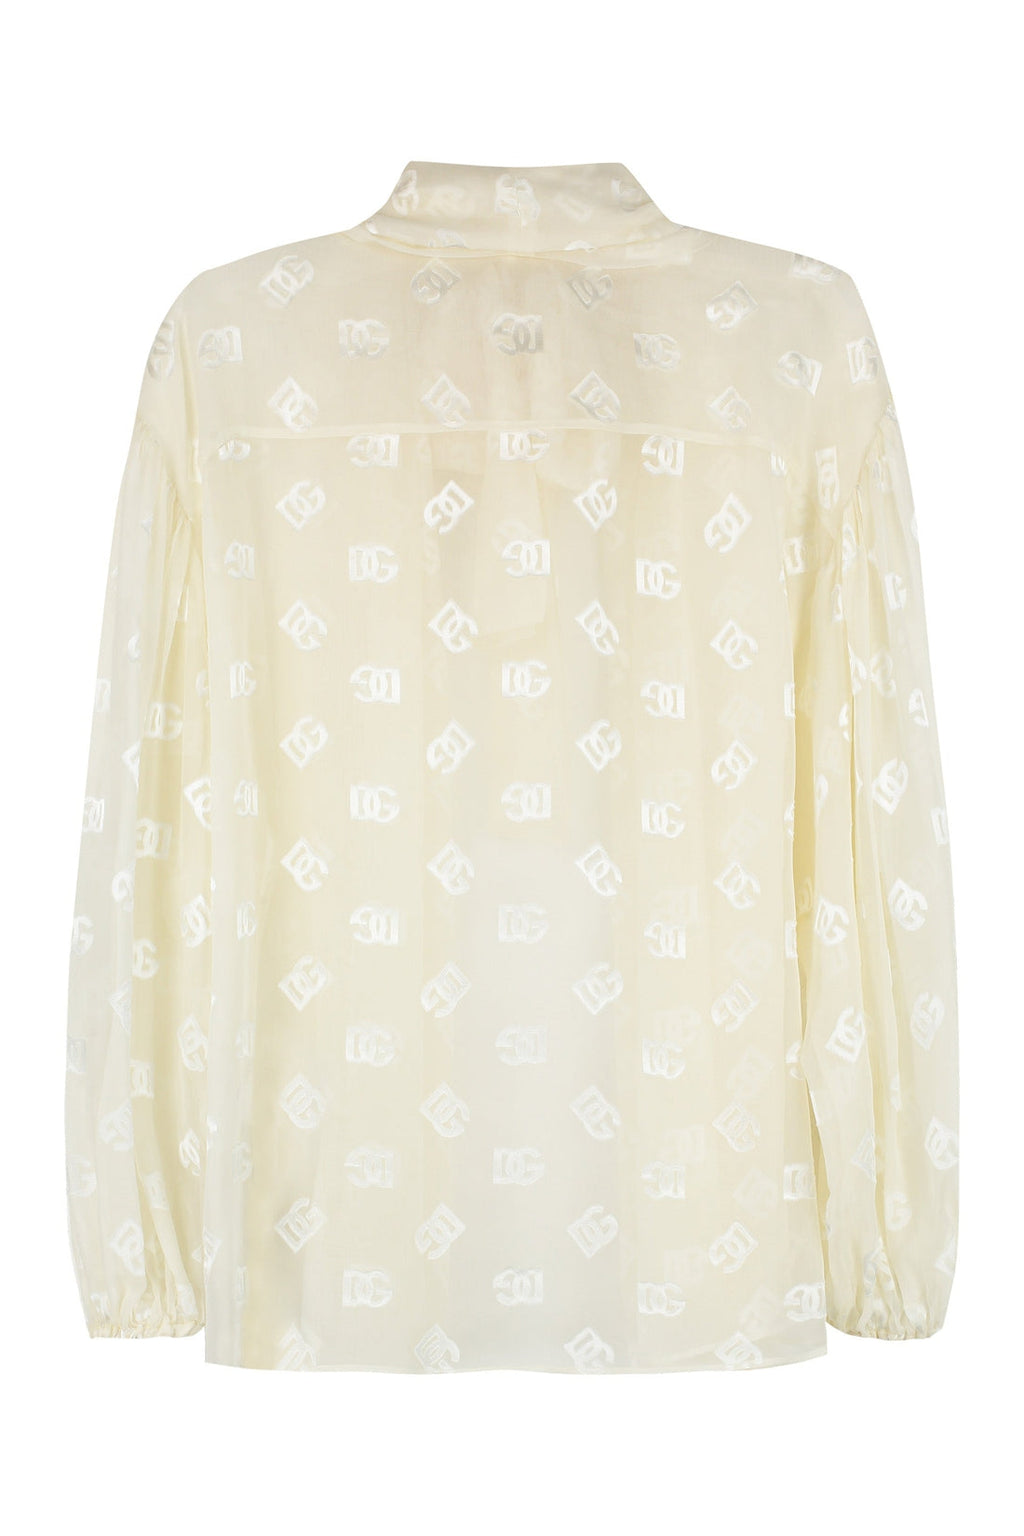 Dolce & Gabbana-OUTLET-SALE-Printed satin blouse-ARCHIVIST